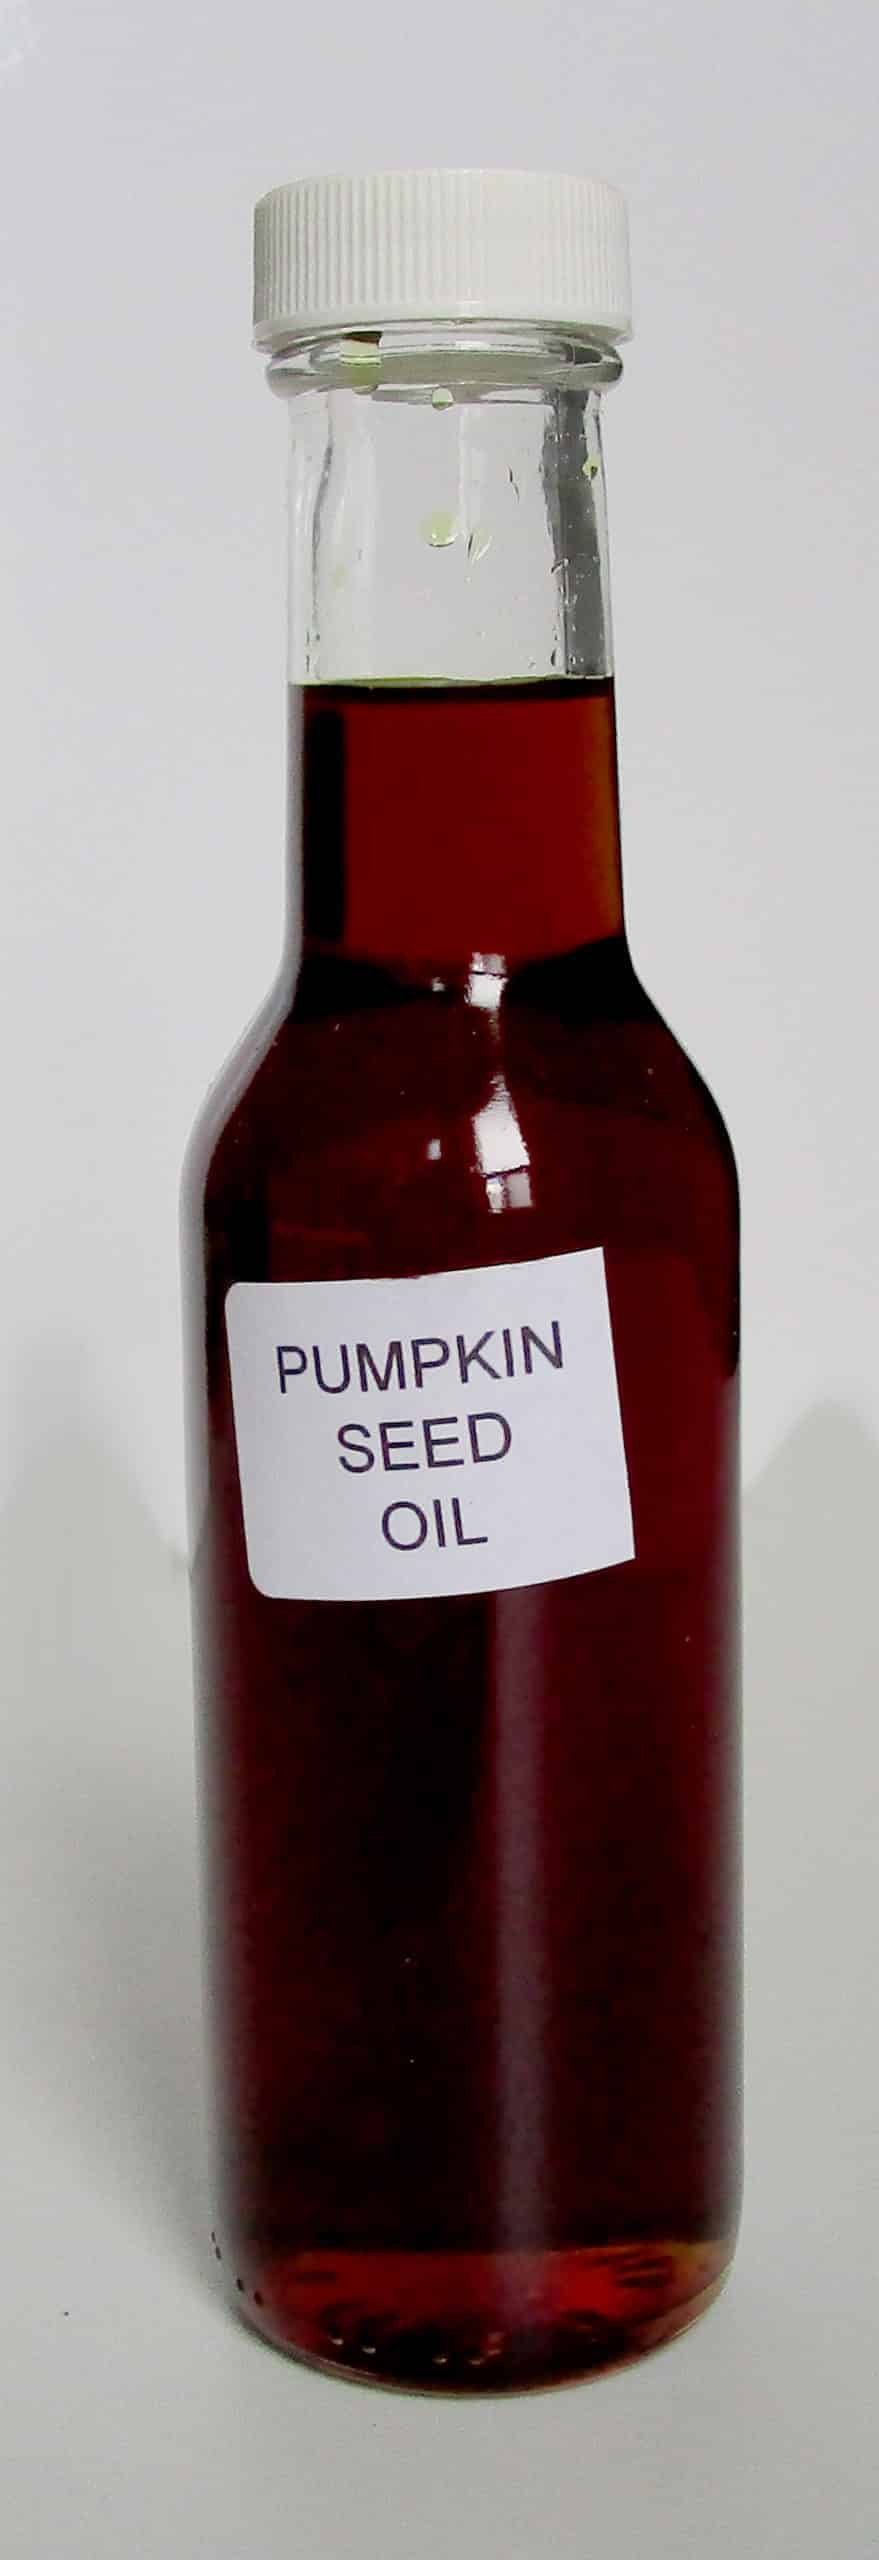 Pumpkin seed oil 150ml